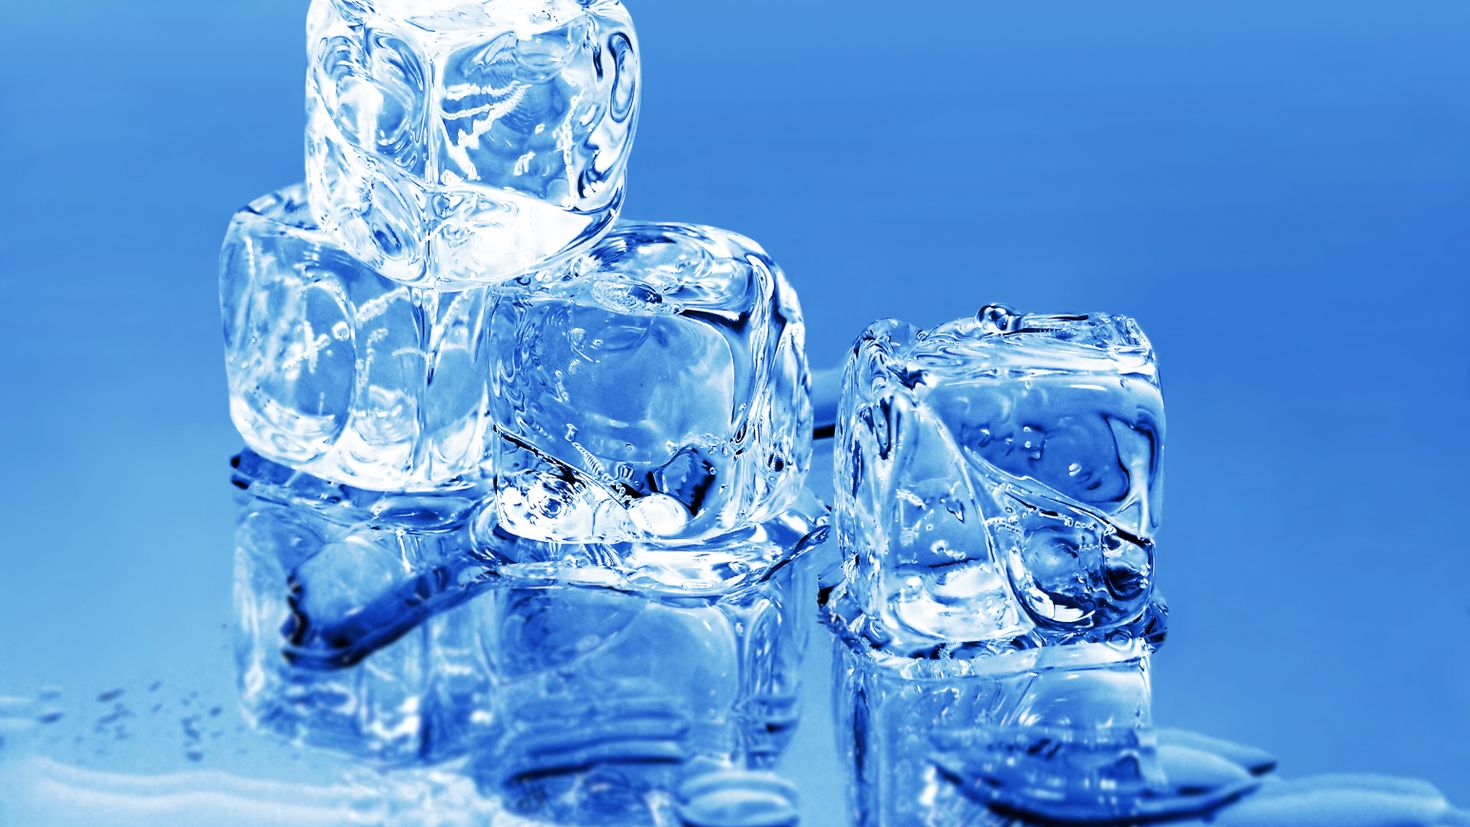 Картинка состояния воды. Ice Cube лед Water. Ice Cube кубик льда. Кусочки льда. Твердая вода.